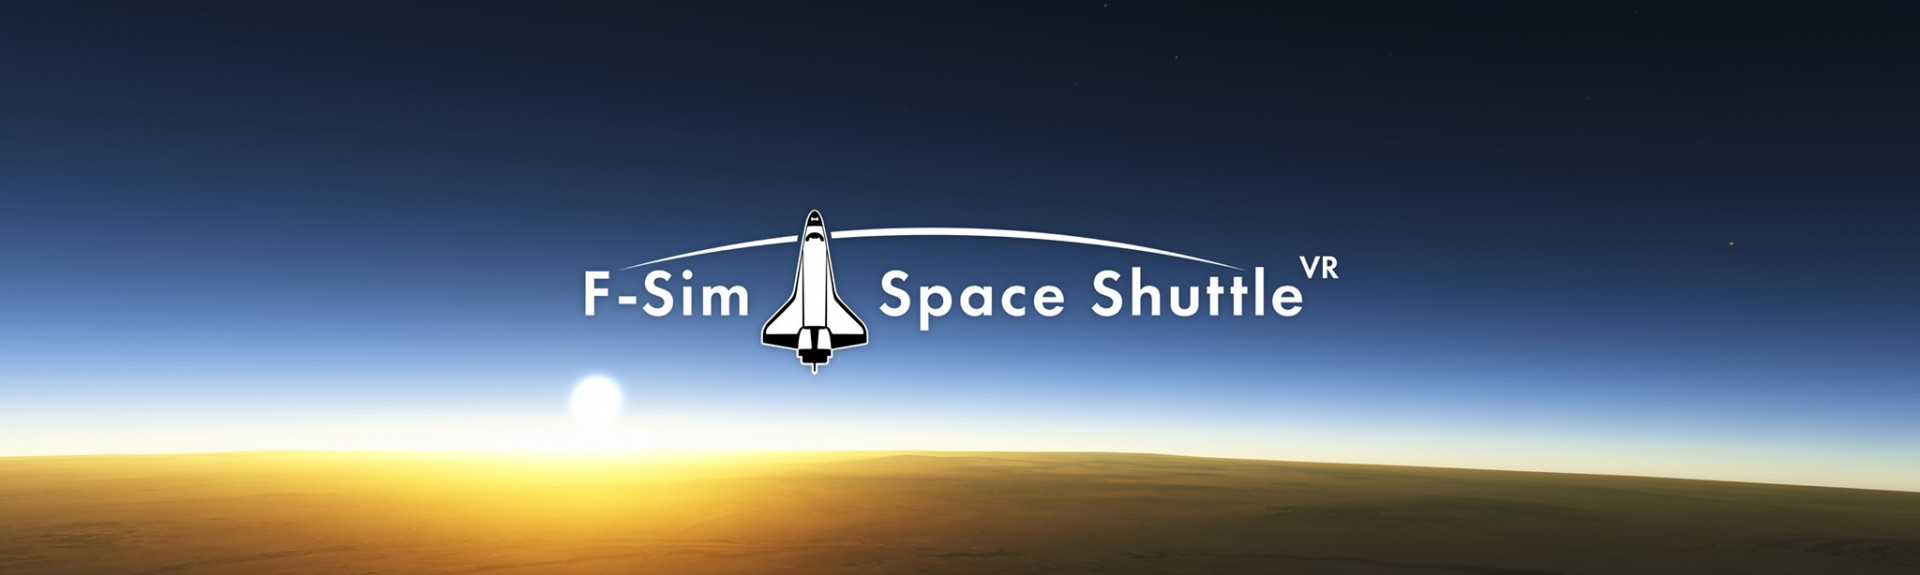 F-Sim | Space Shuttle VR